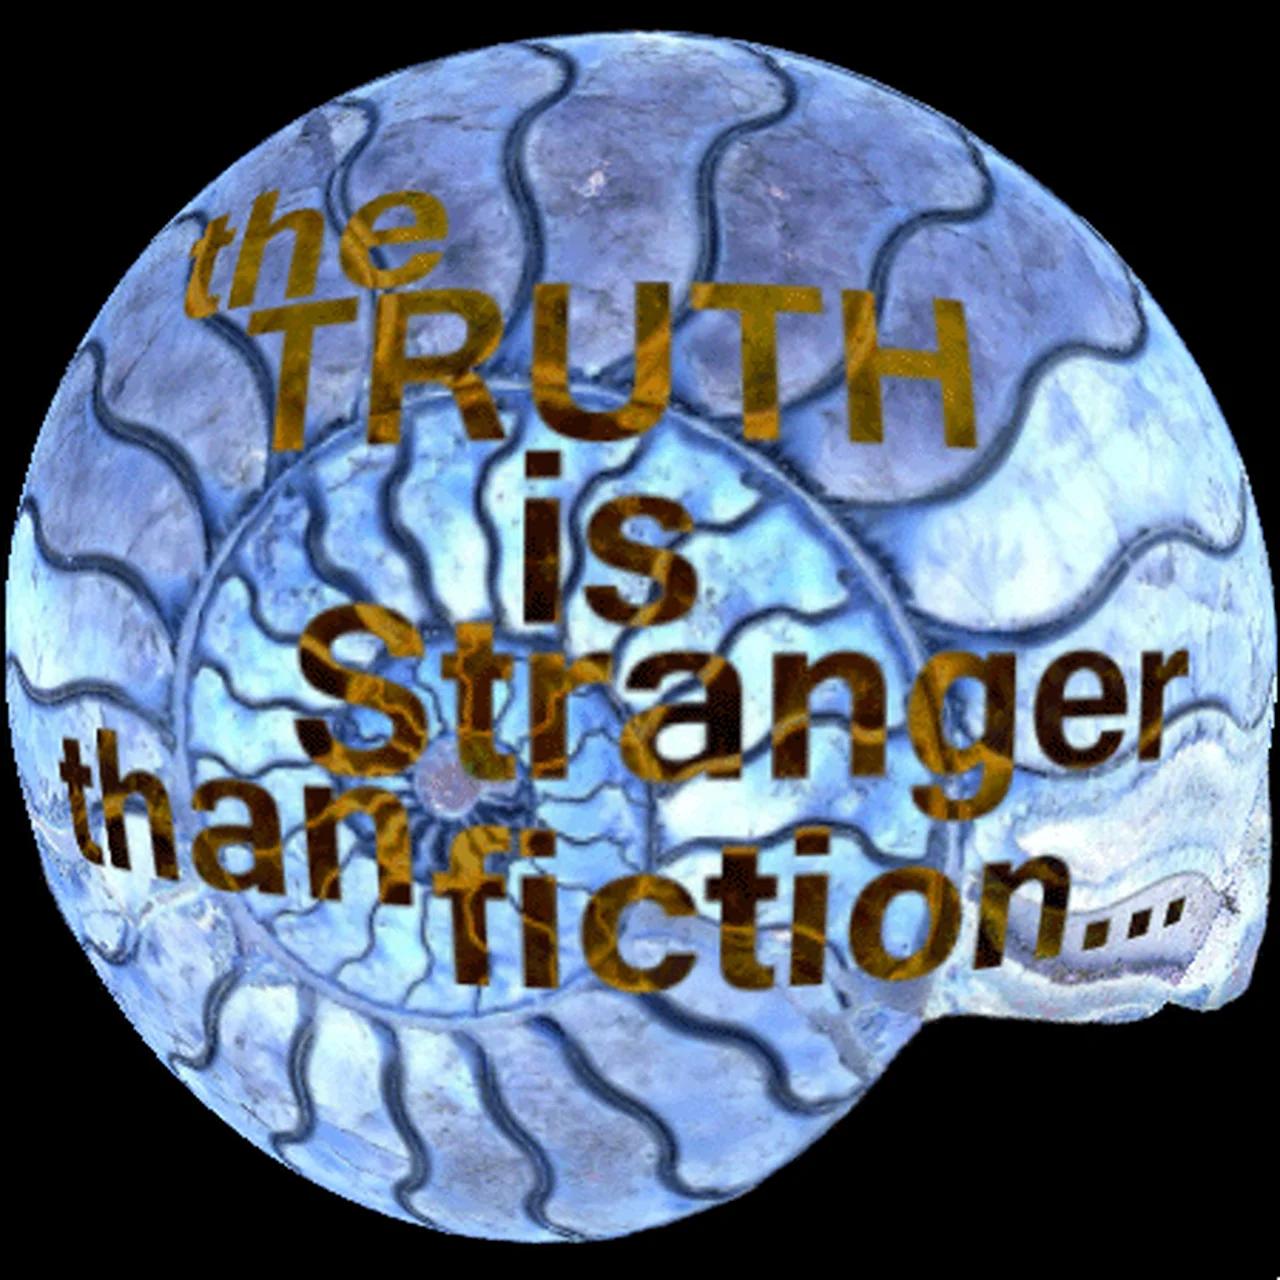 truth is stranger than fiction argumentative essay